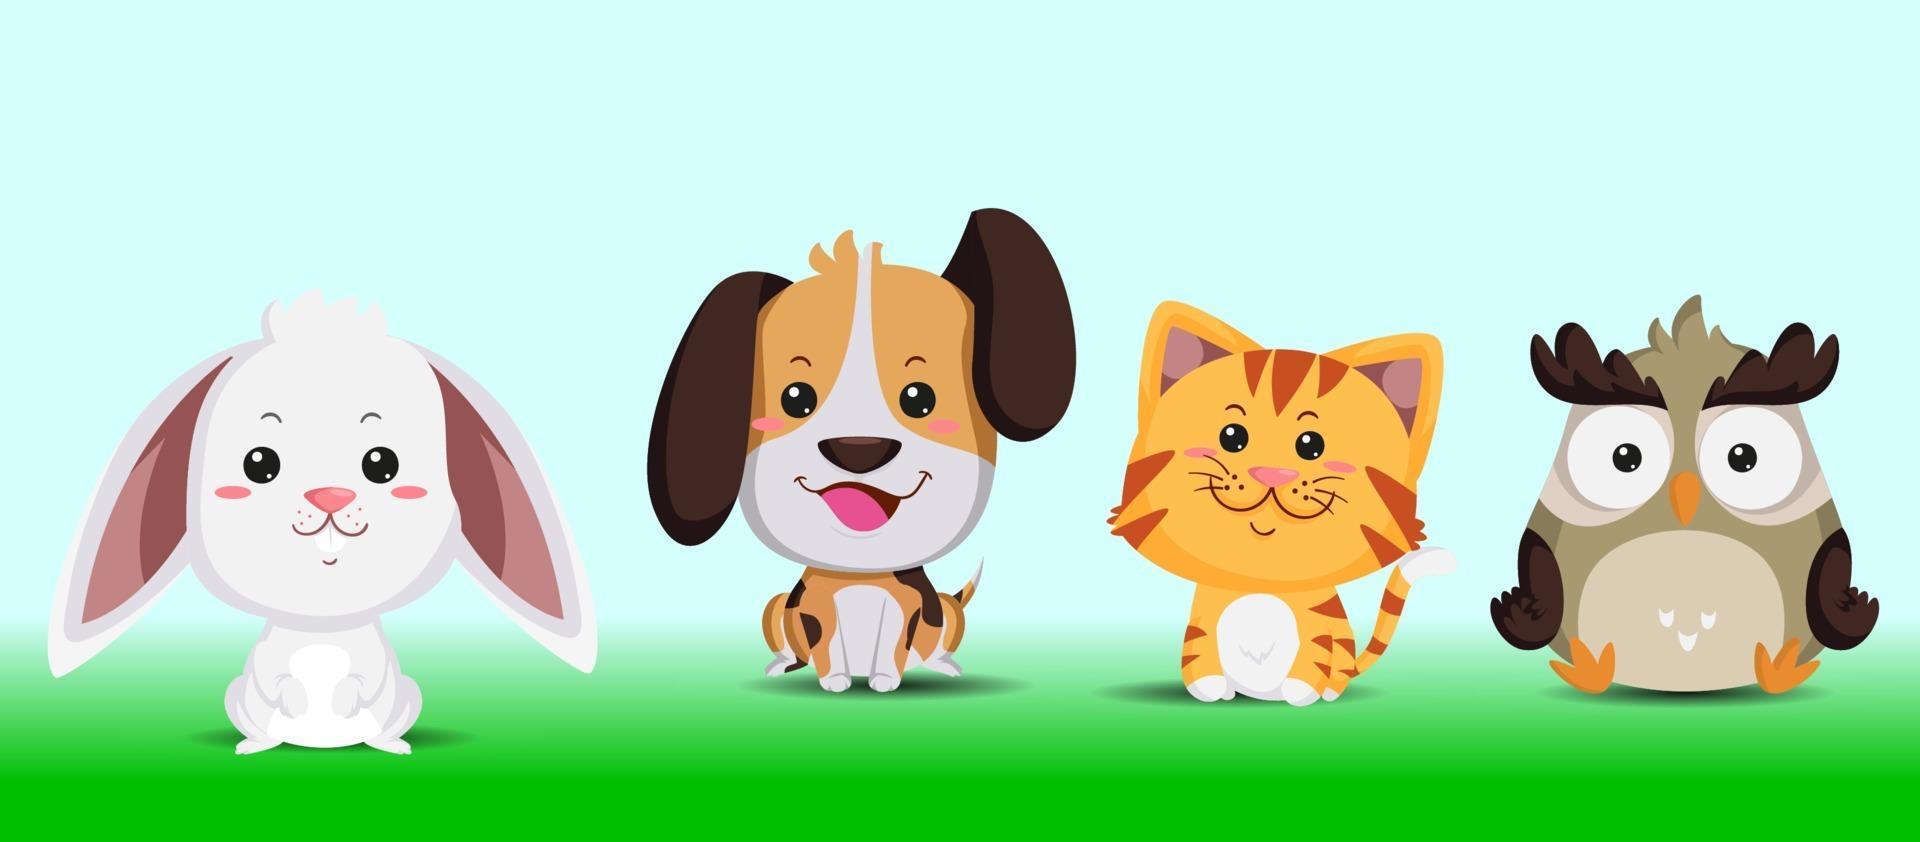 Illustration cute animal bunny, dog, tiger, and owl set vector